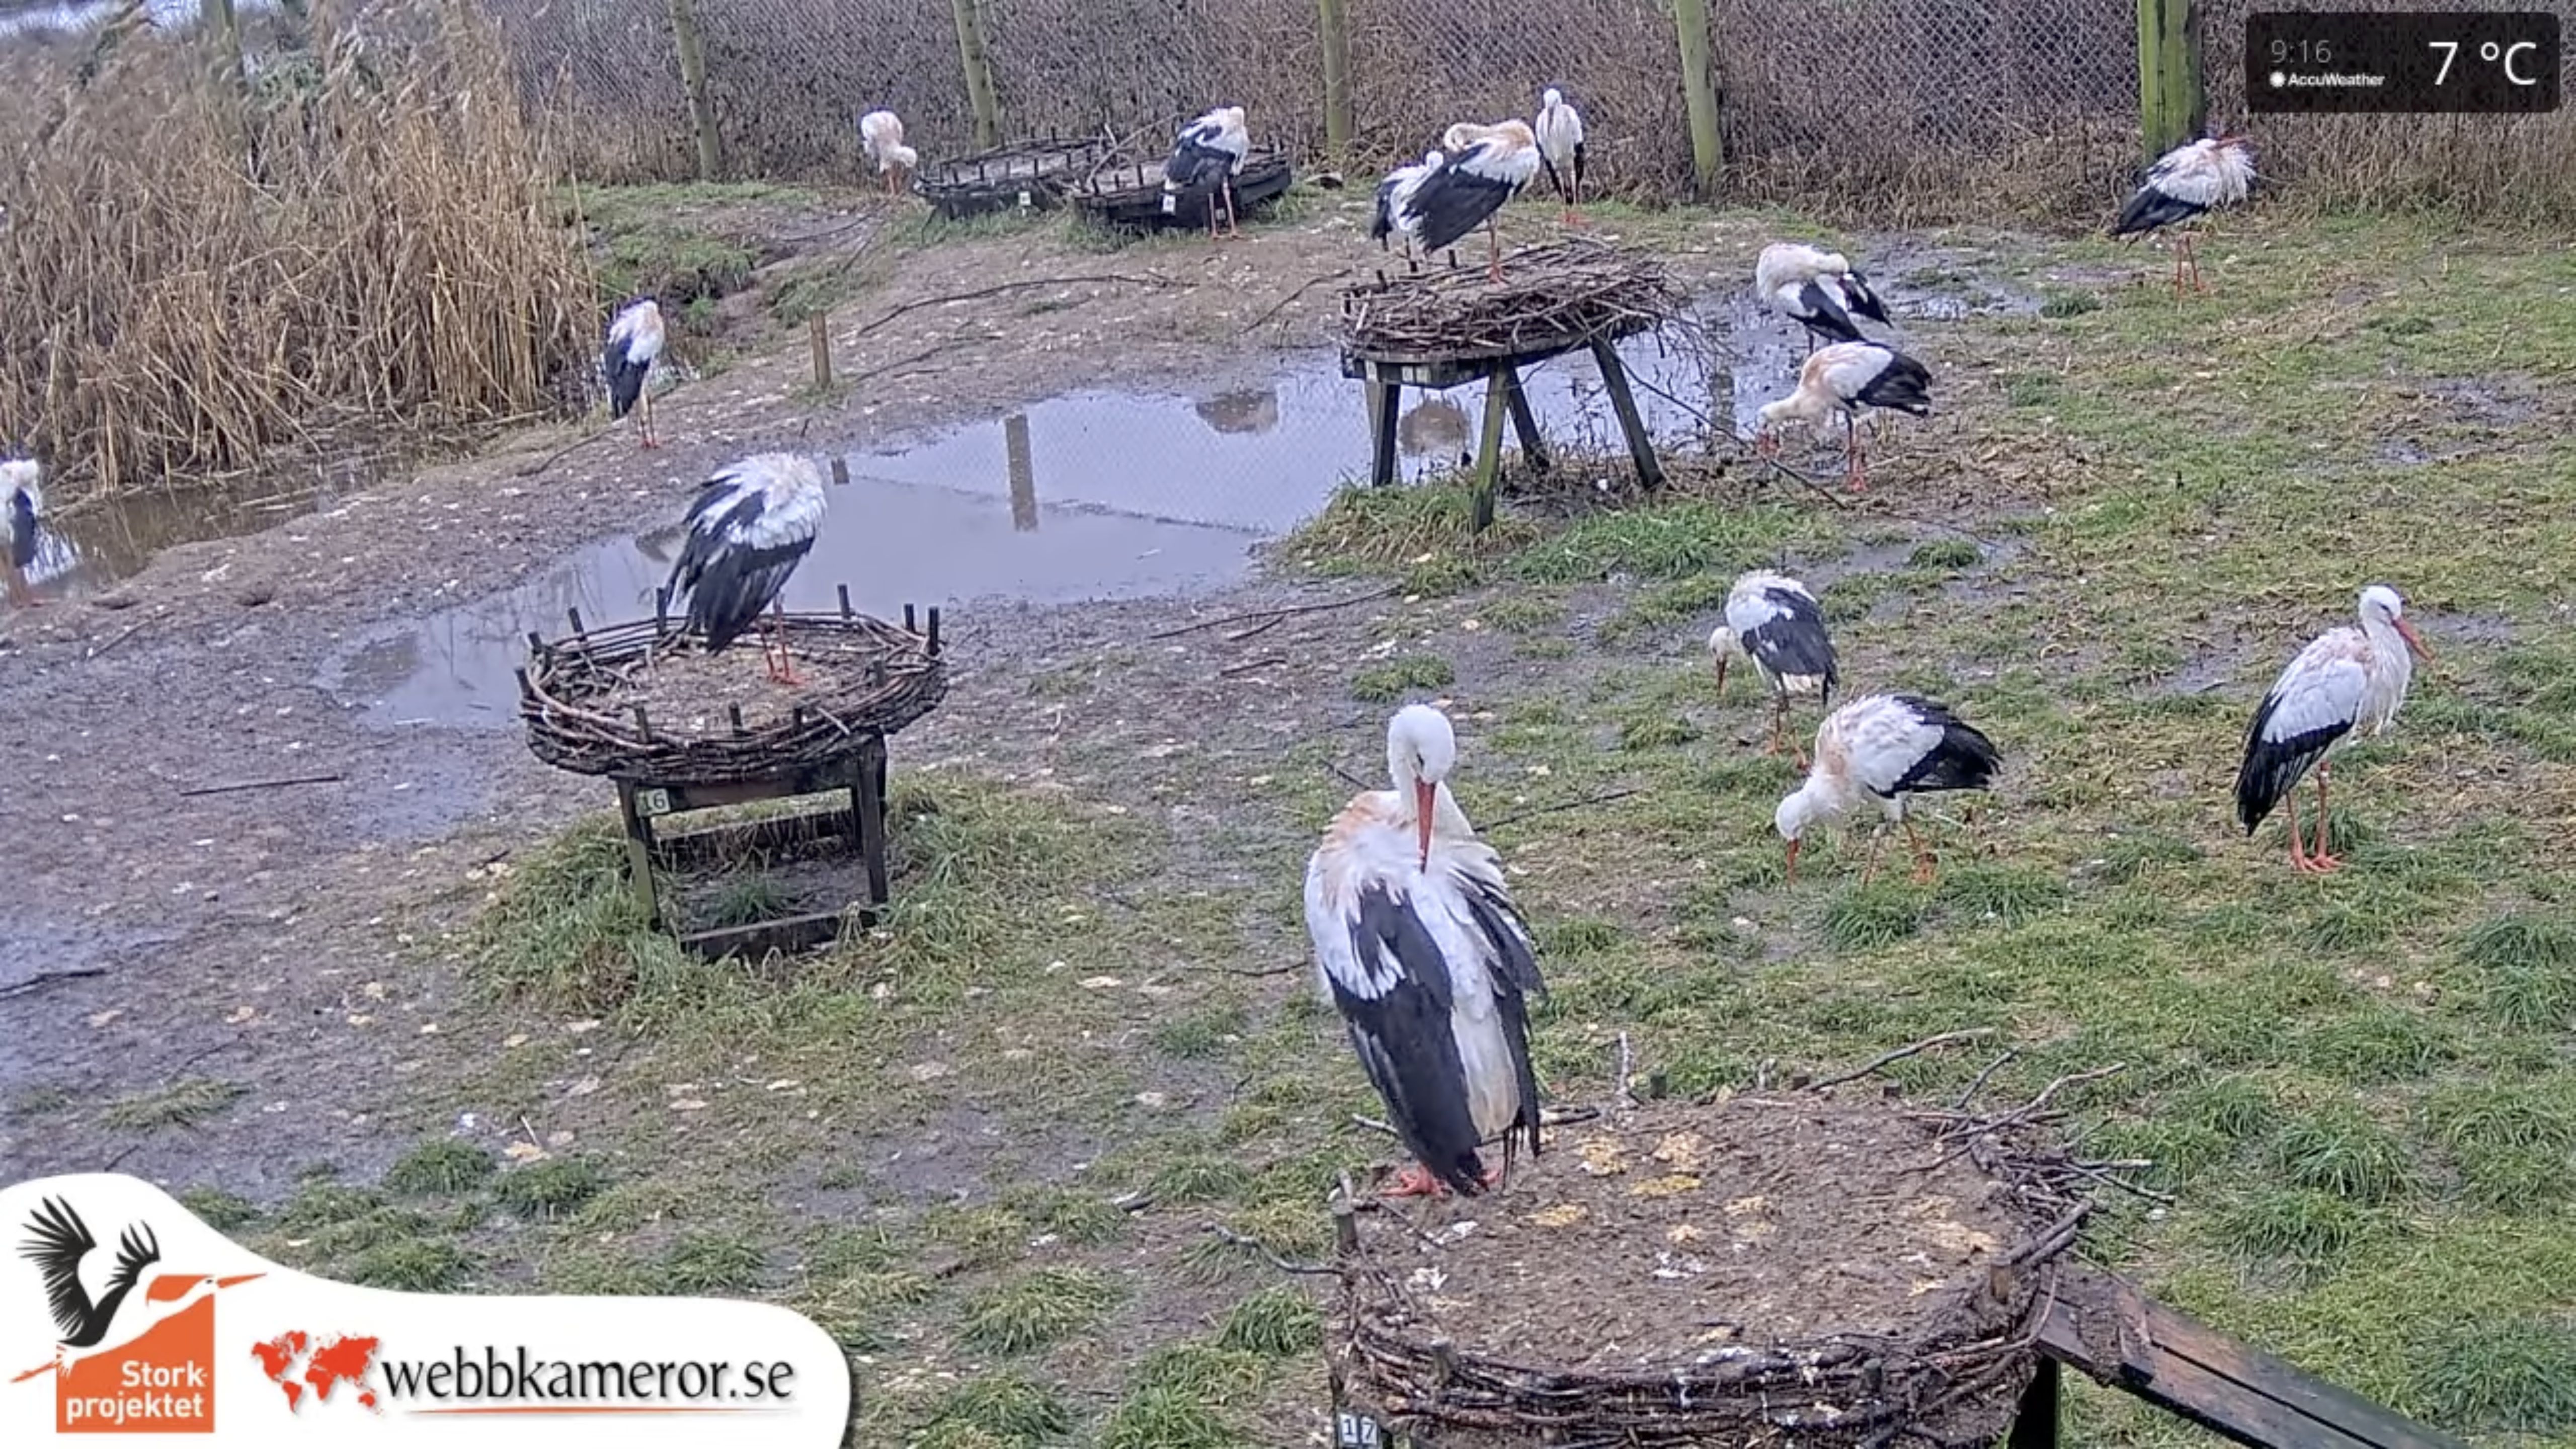 Fulltofta Stork Enclosure, Sweden